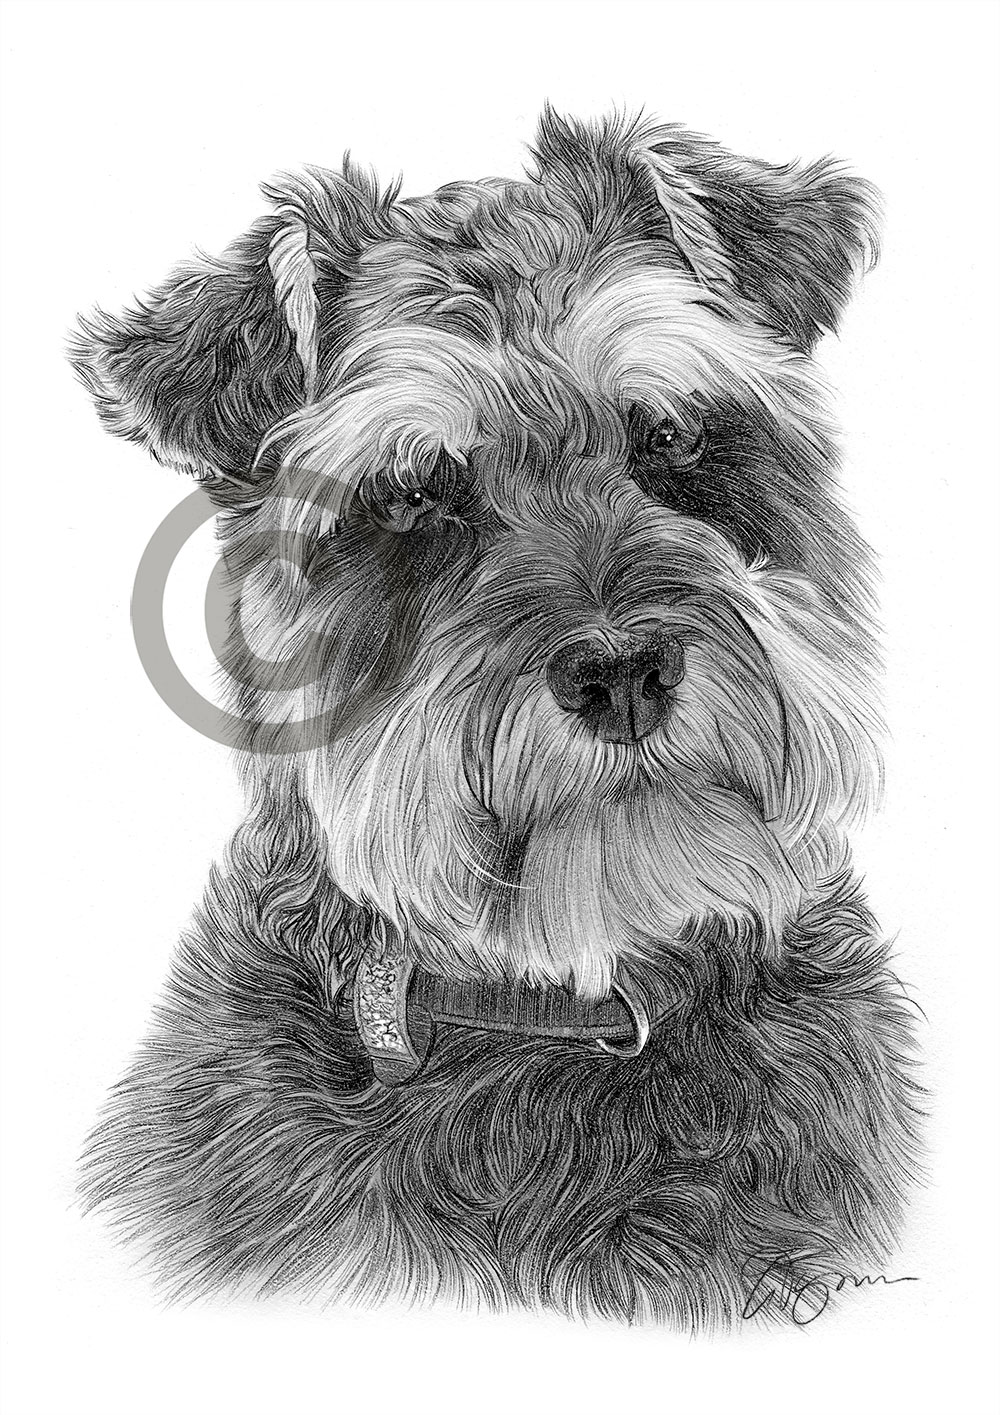 SCHNAUZER art dog pencil drawing print A4 only signed pet portrait | eBay